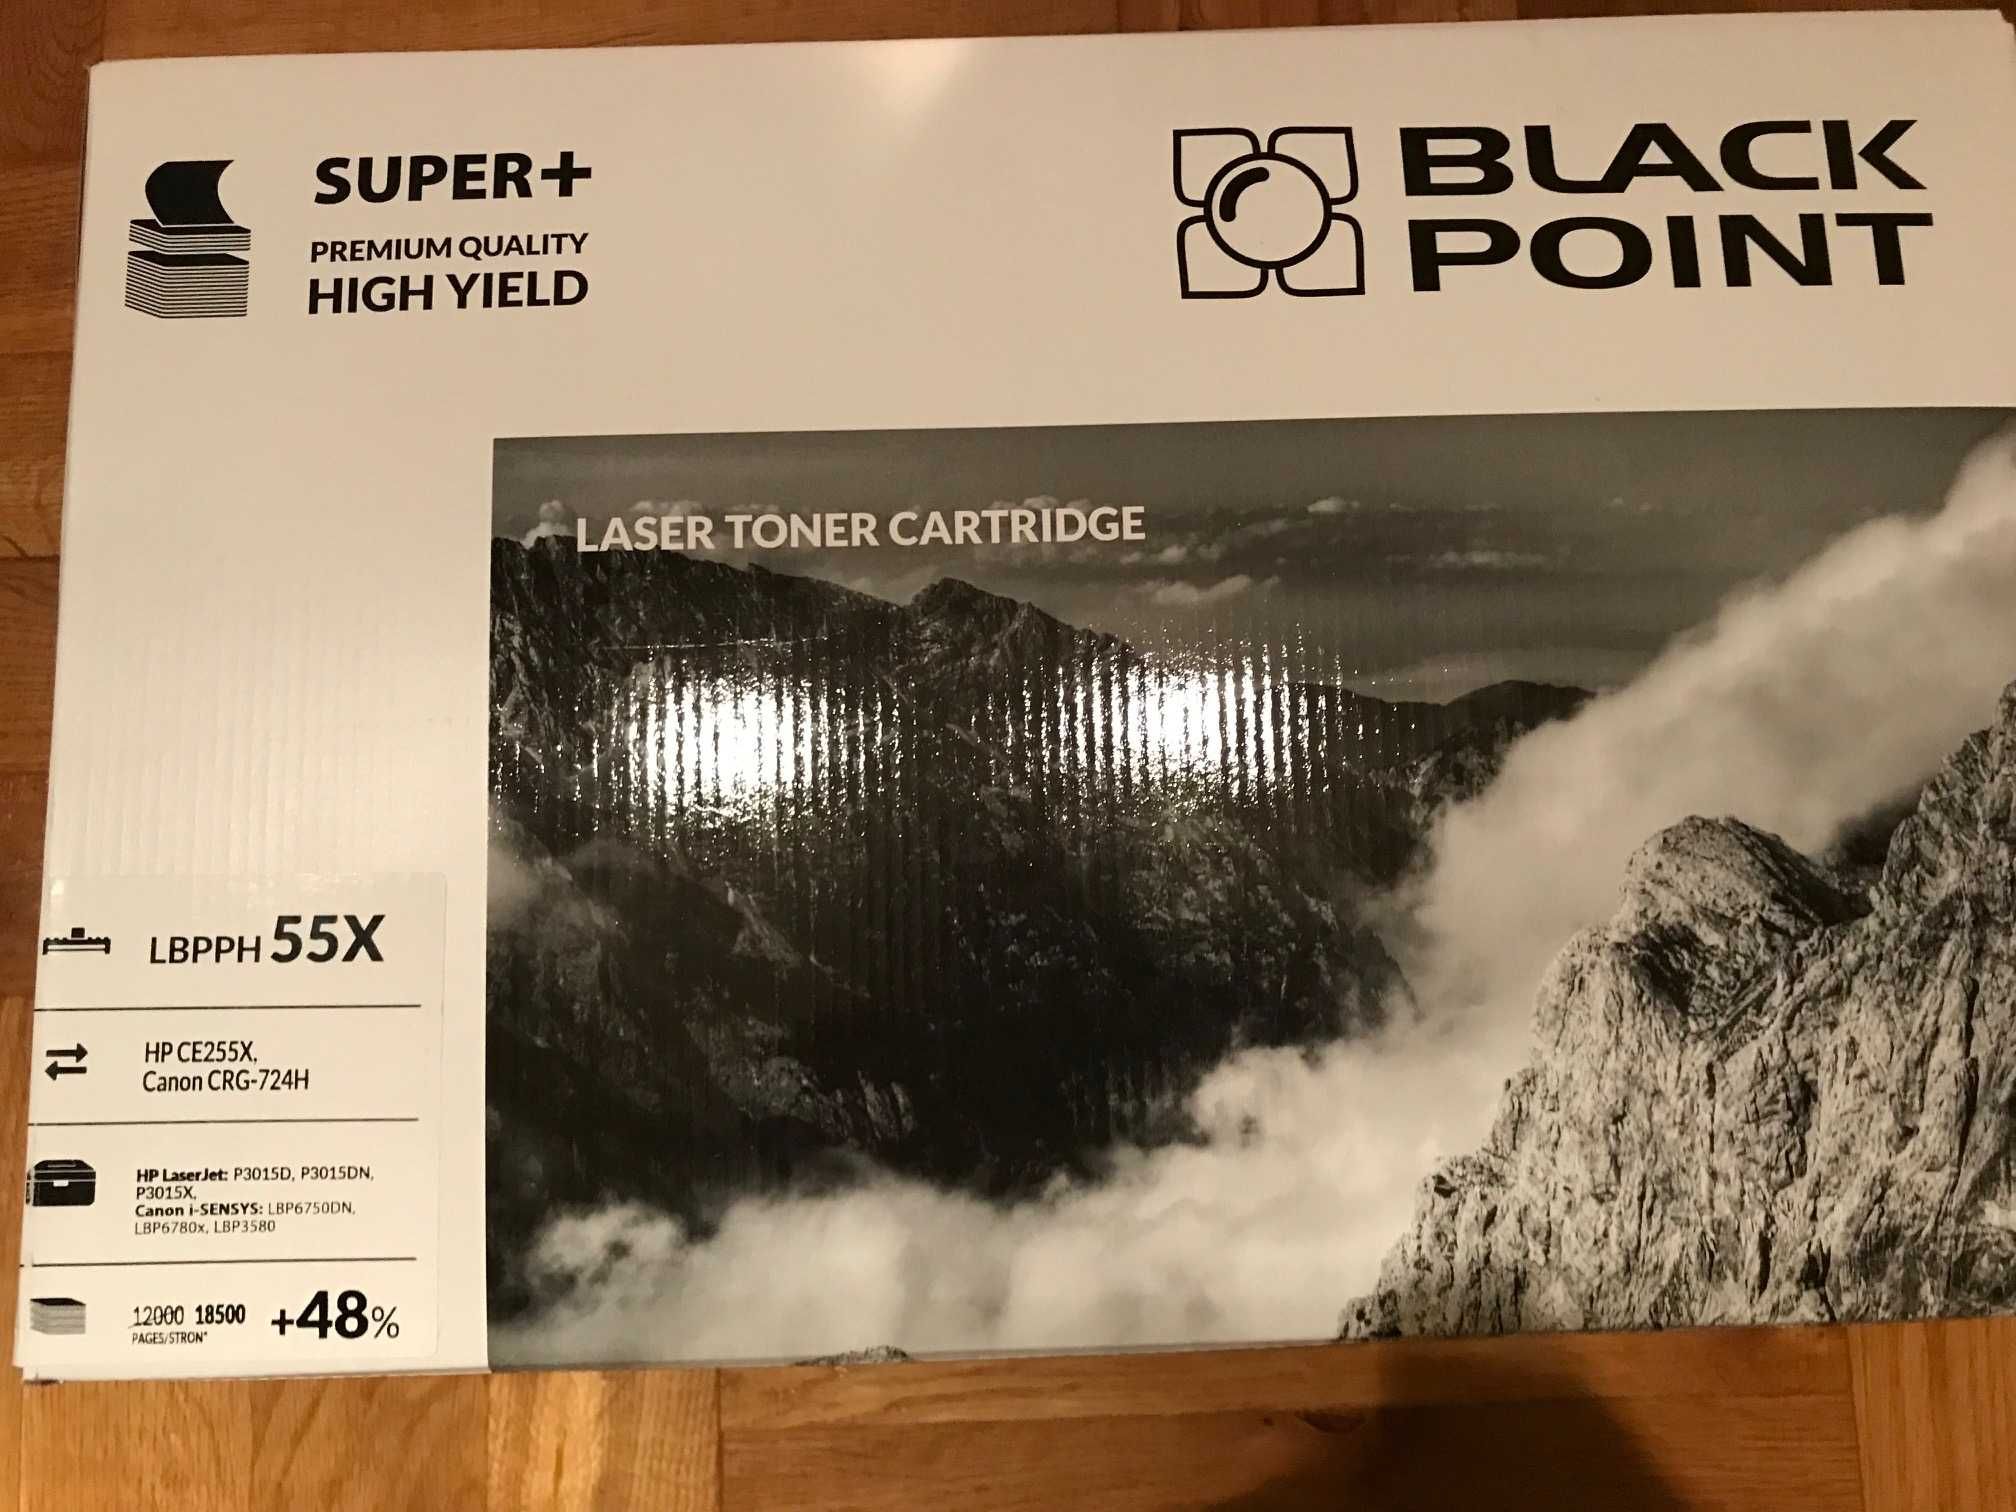 Toner zamiennik 55X HP (CE255X) czarny Canon CRG-724H Black Point